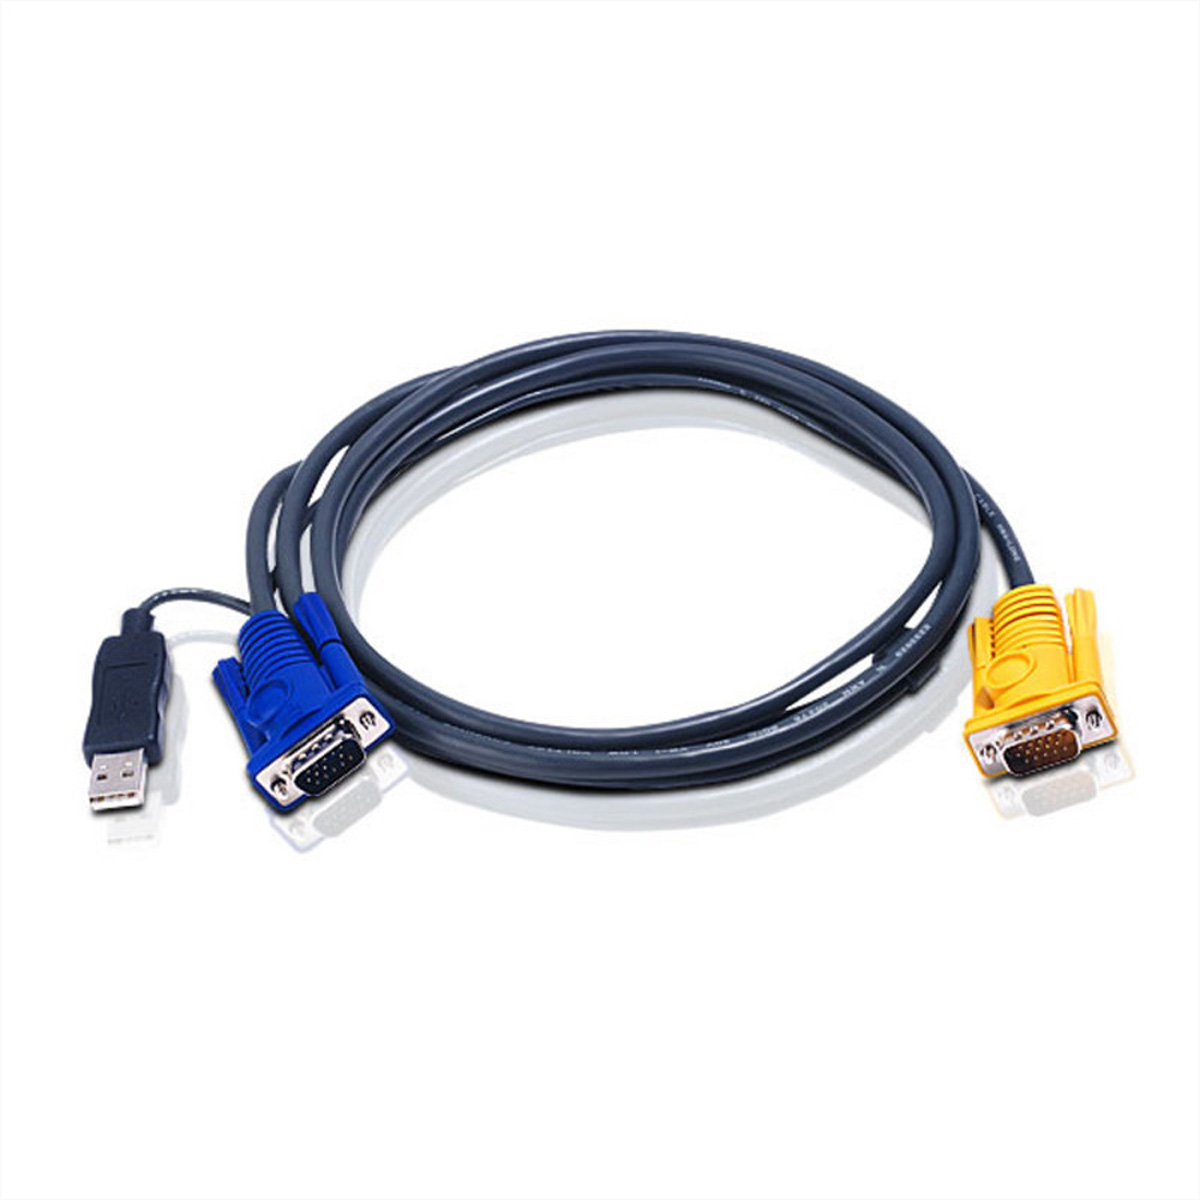 ATEN 2L-5202UP KVM-Kabel VGA USB (mit eingebautem PS/2-USB-Konverter), schwarz, 1,8 m